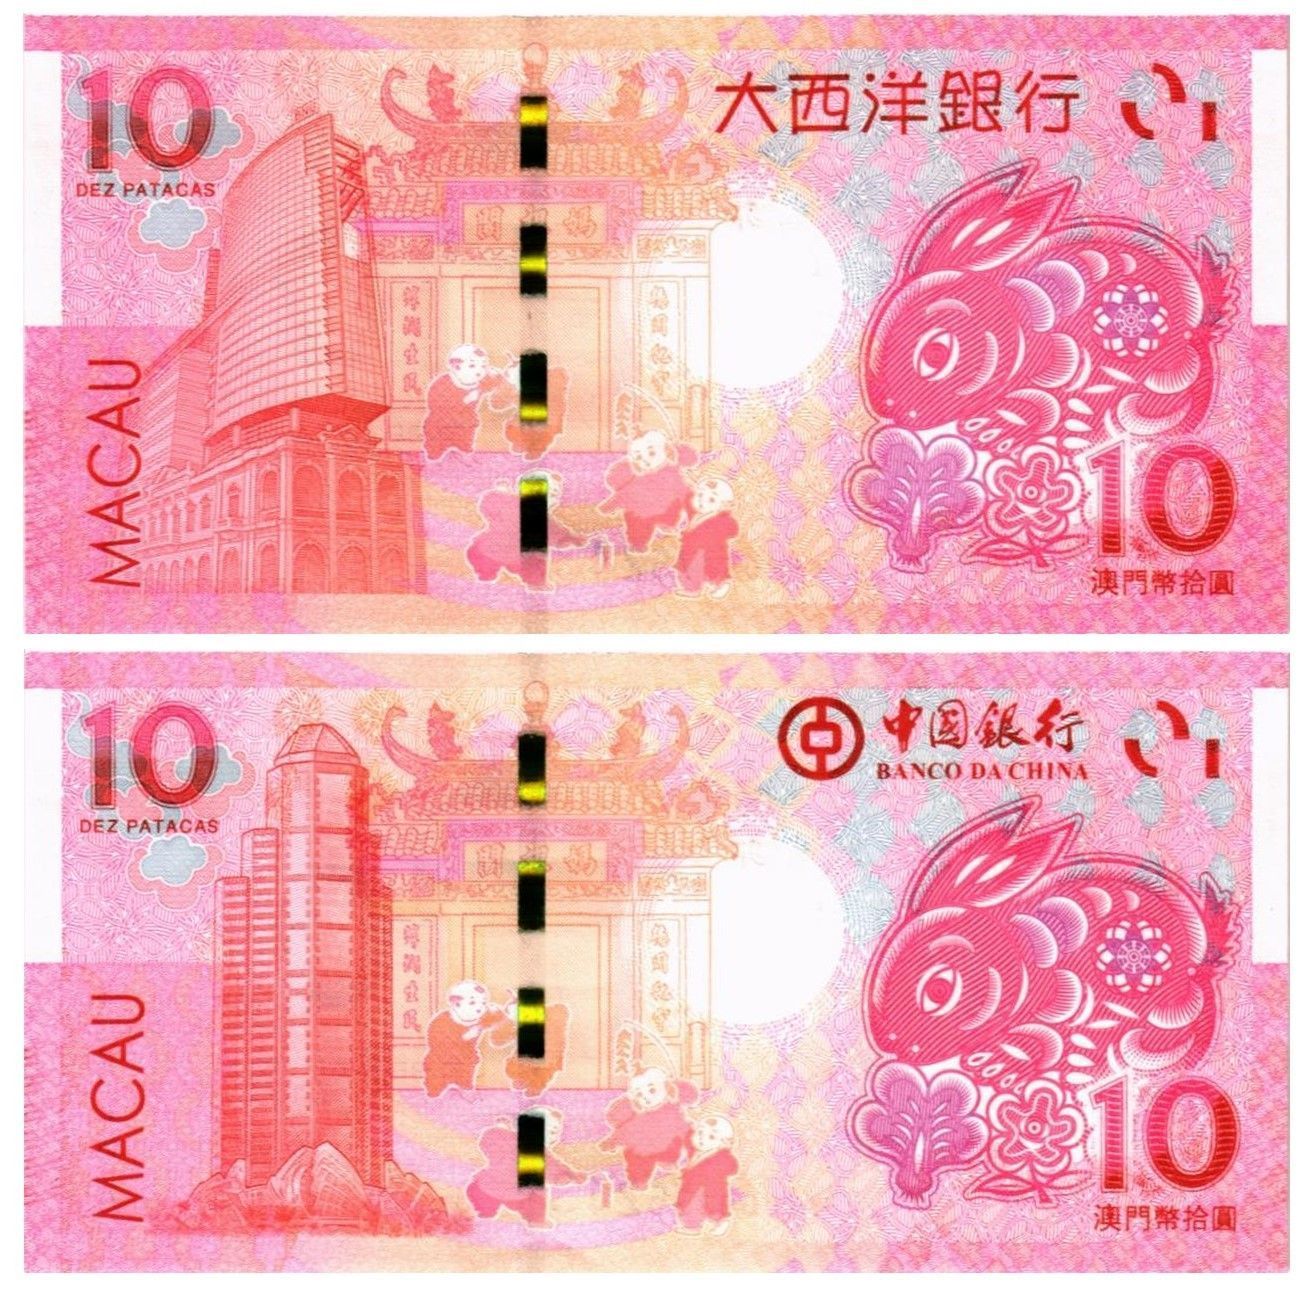 МАКАО 10 ПАТАК (ULTRAMARINO + BANK OF CHINA) мини 2